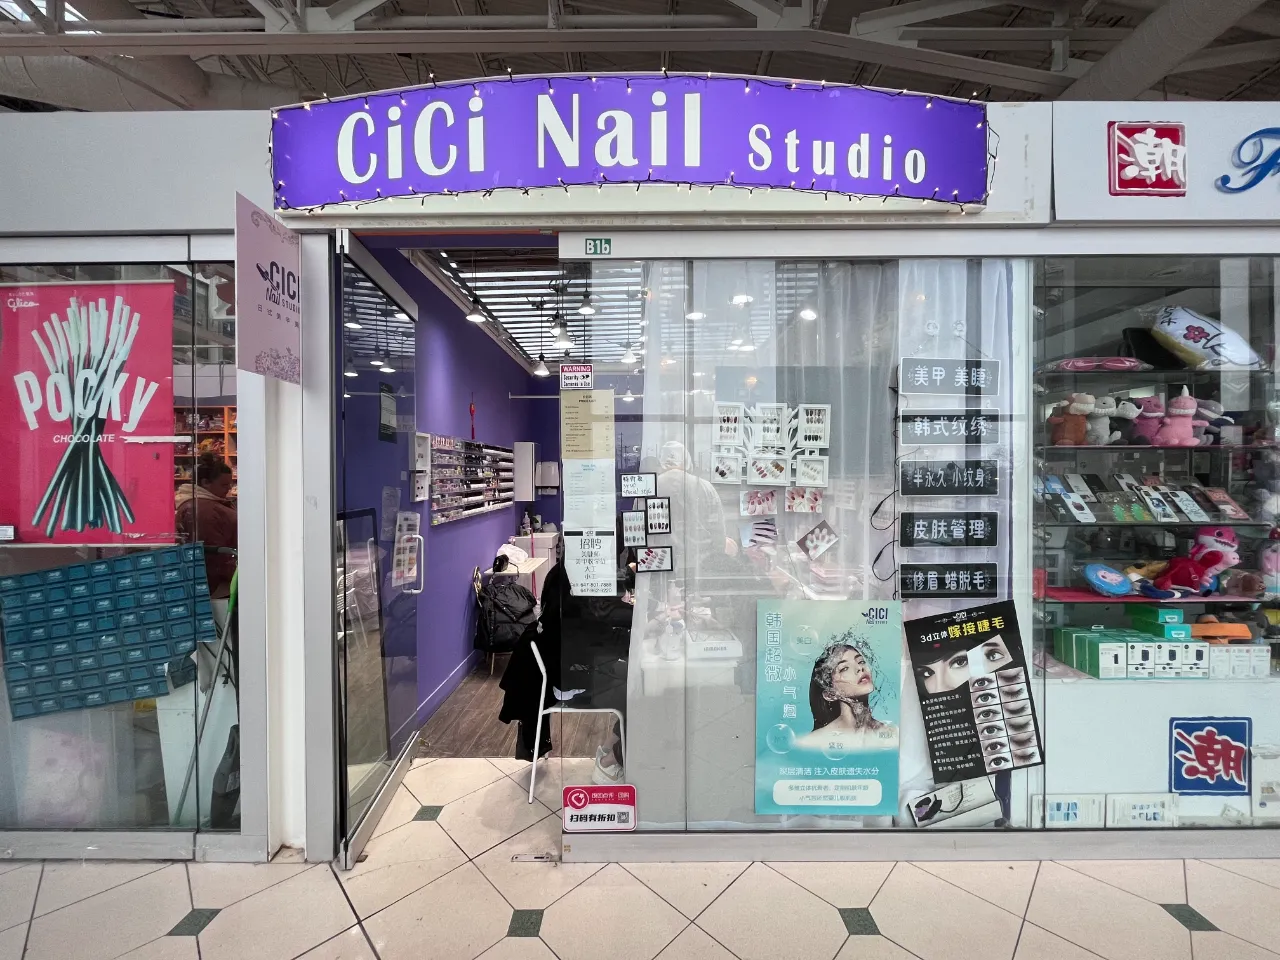 CiCi Nail Studio